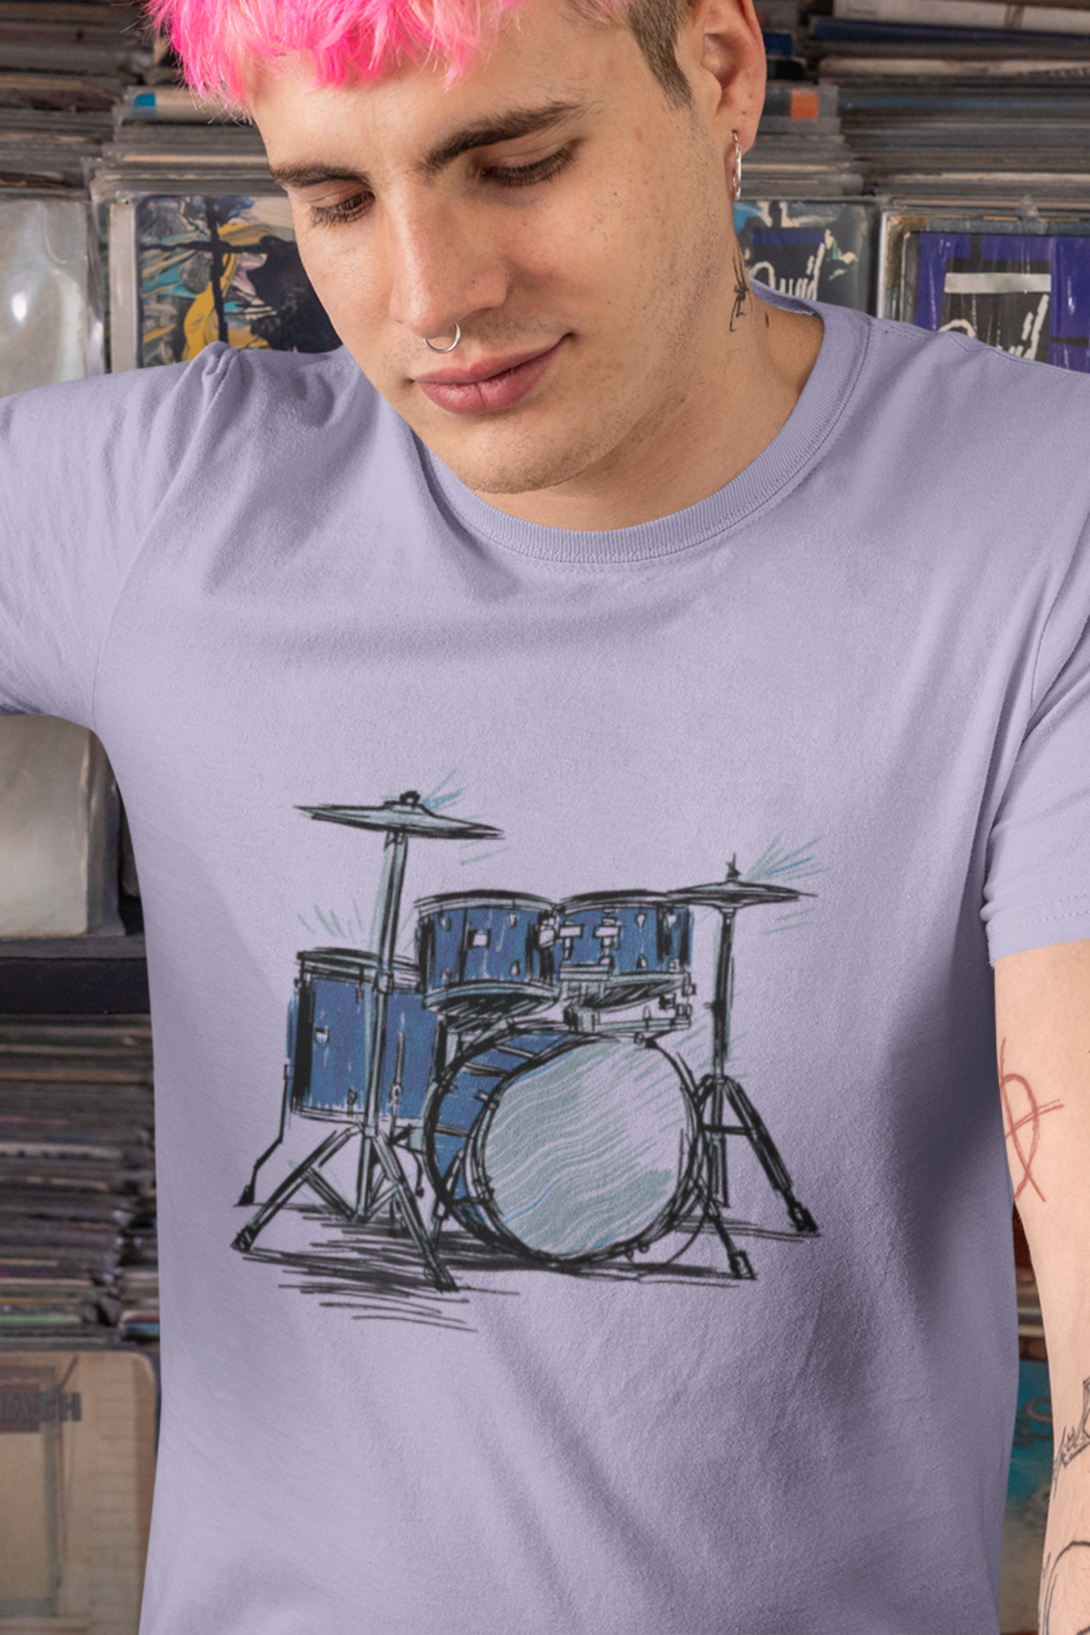 Rhythmic Beats Printed T-Shirt For Men - WowWaves - 2